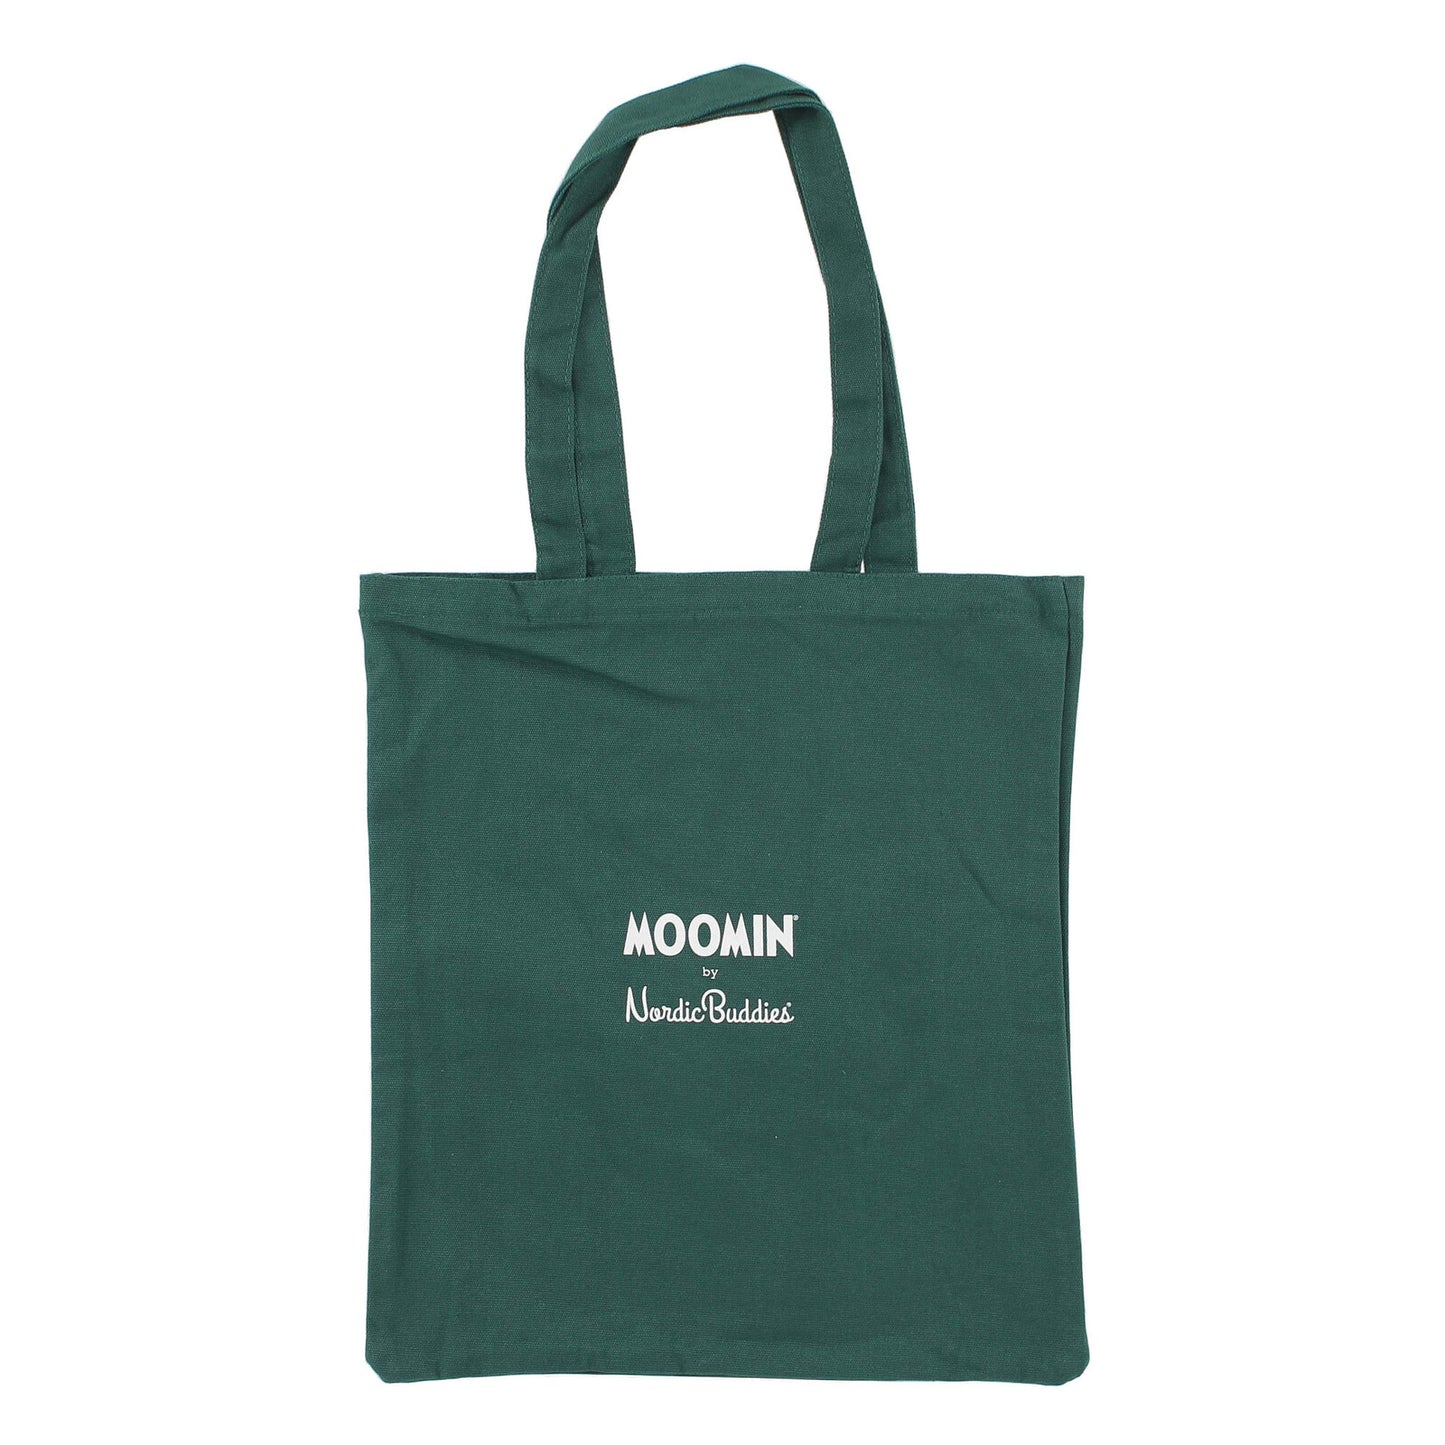 Moomin By Nordicbuddies 帆布袋 8款色